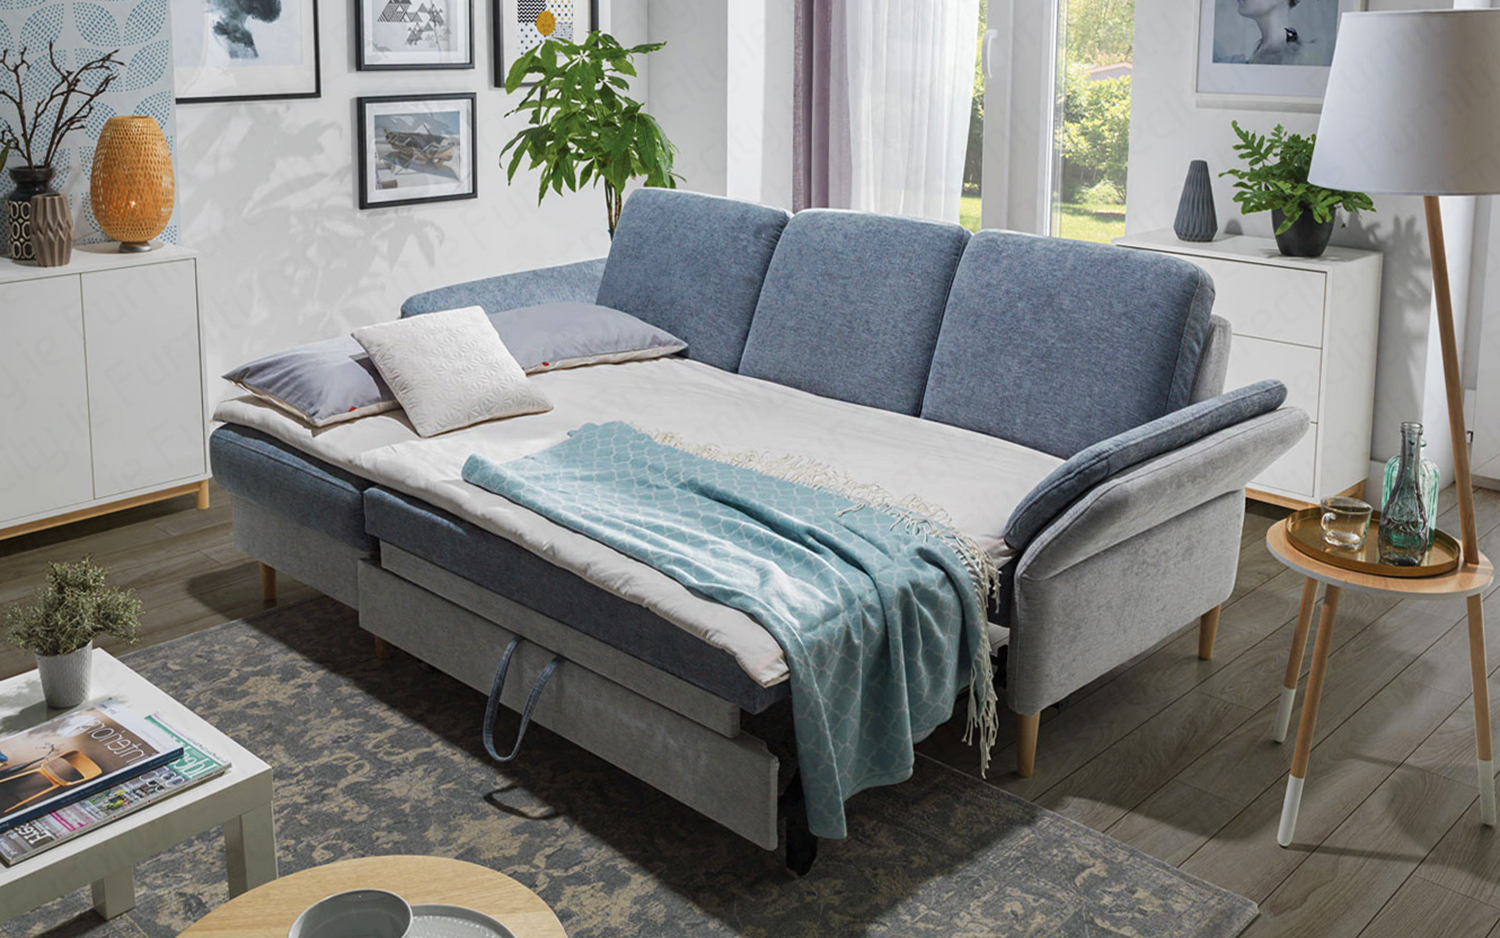 Sofa bed SOLE MINI by Furniturecity.ie